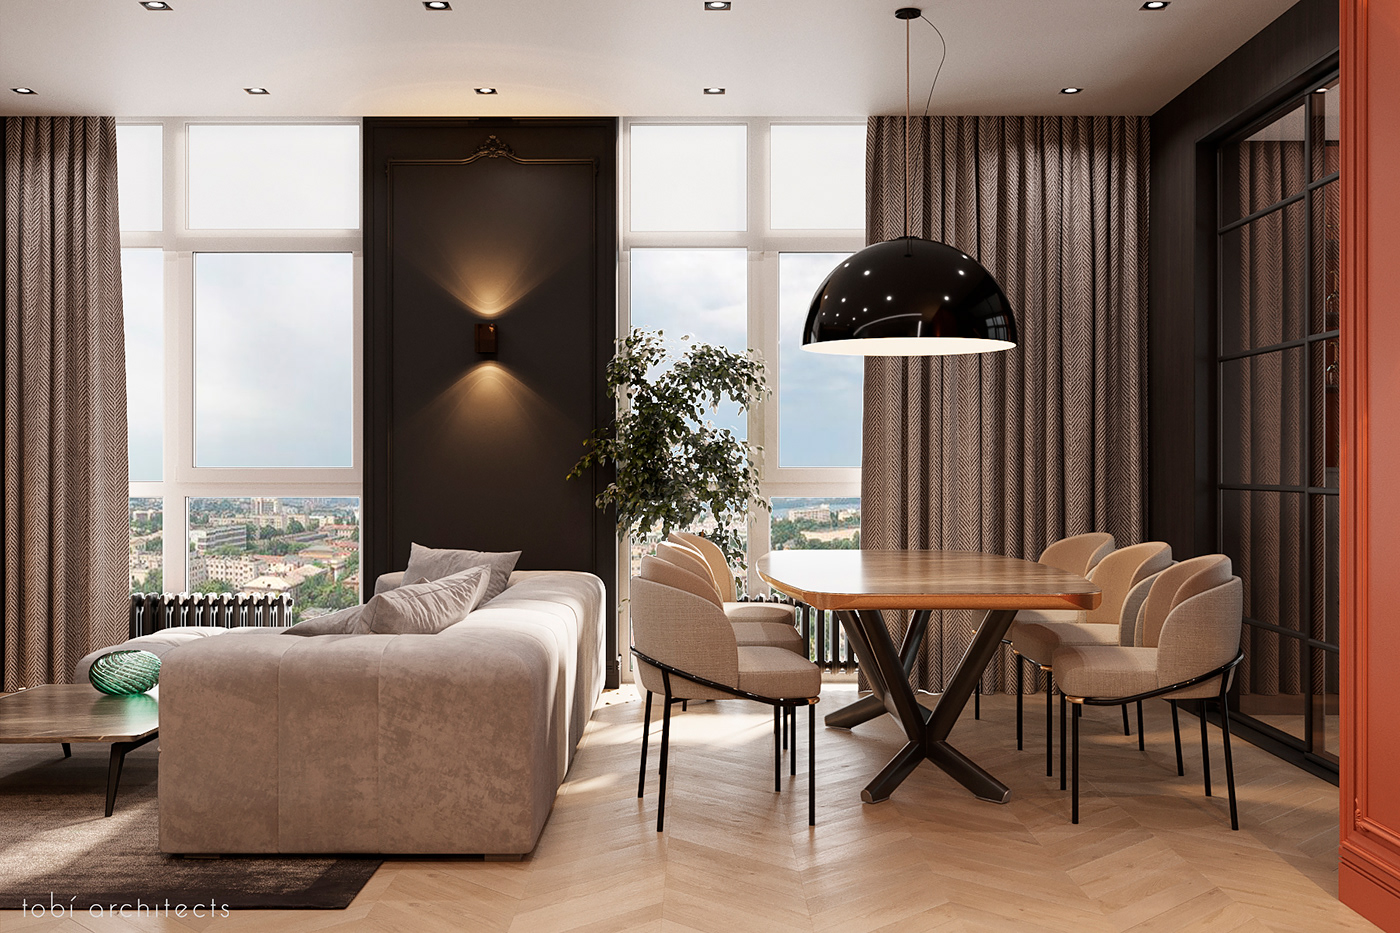 apartmentdesign art bedroomdesign interiordesign kitchendesign livingdesign modernhouse visualisation